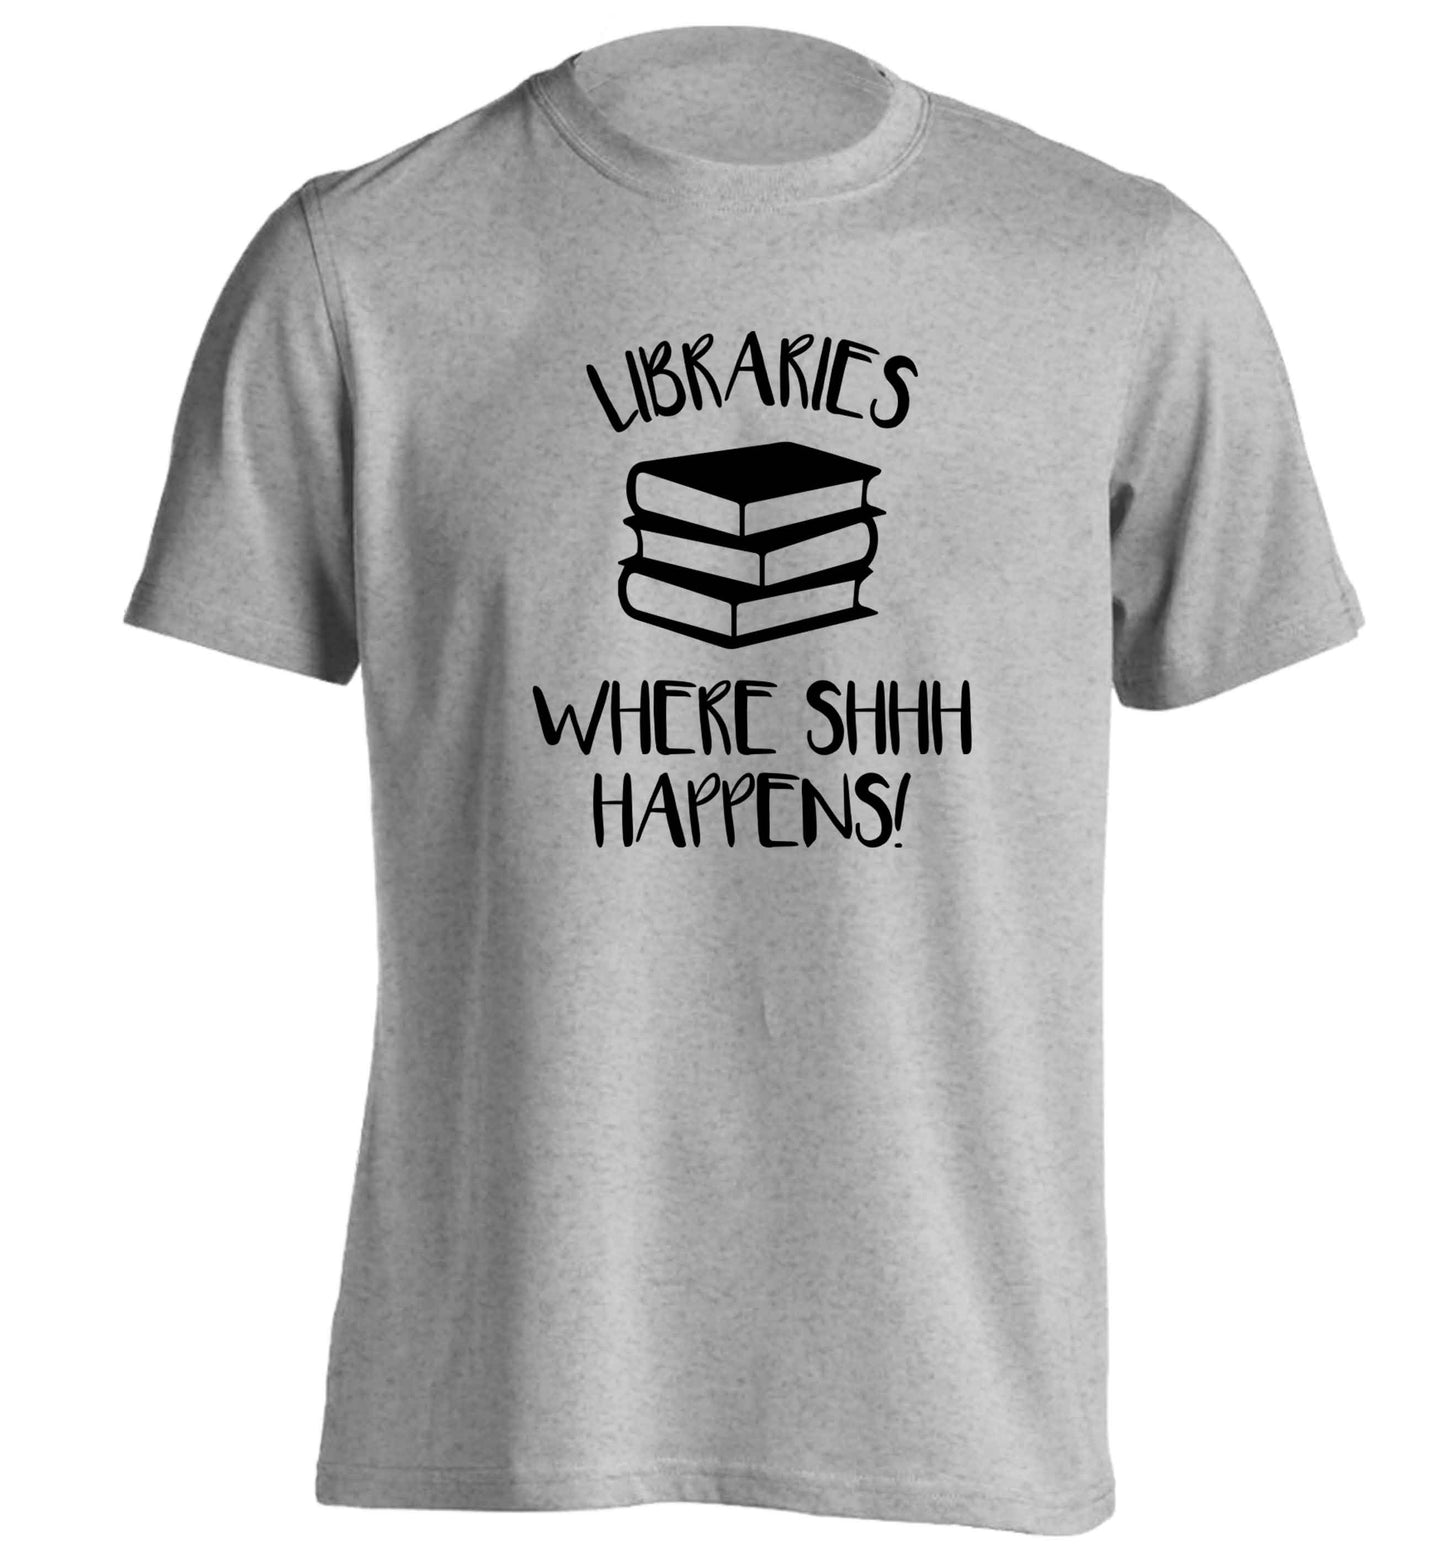 Libraries where shh happens! adults unisex grey Tshirt 2XL